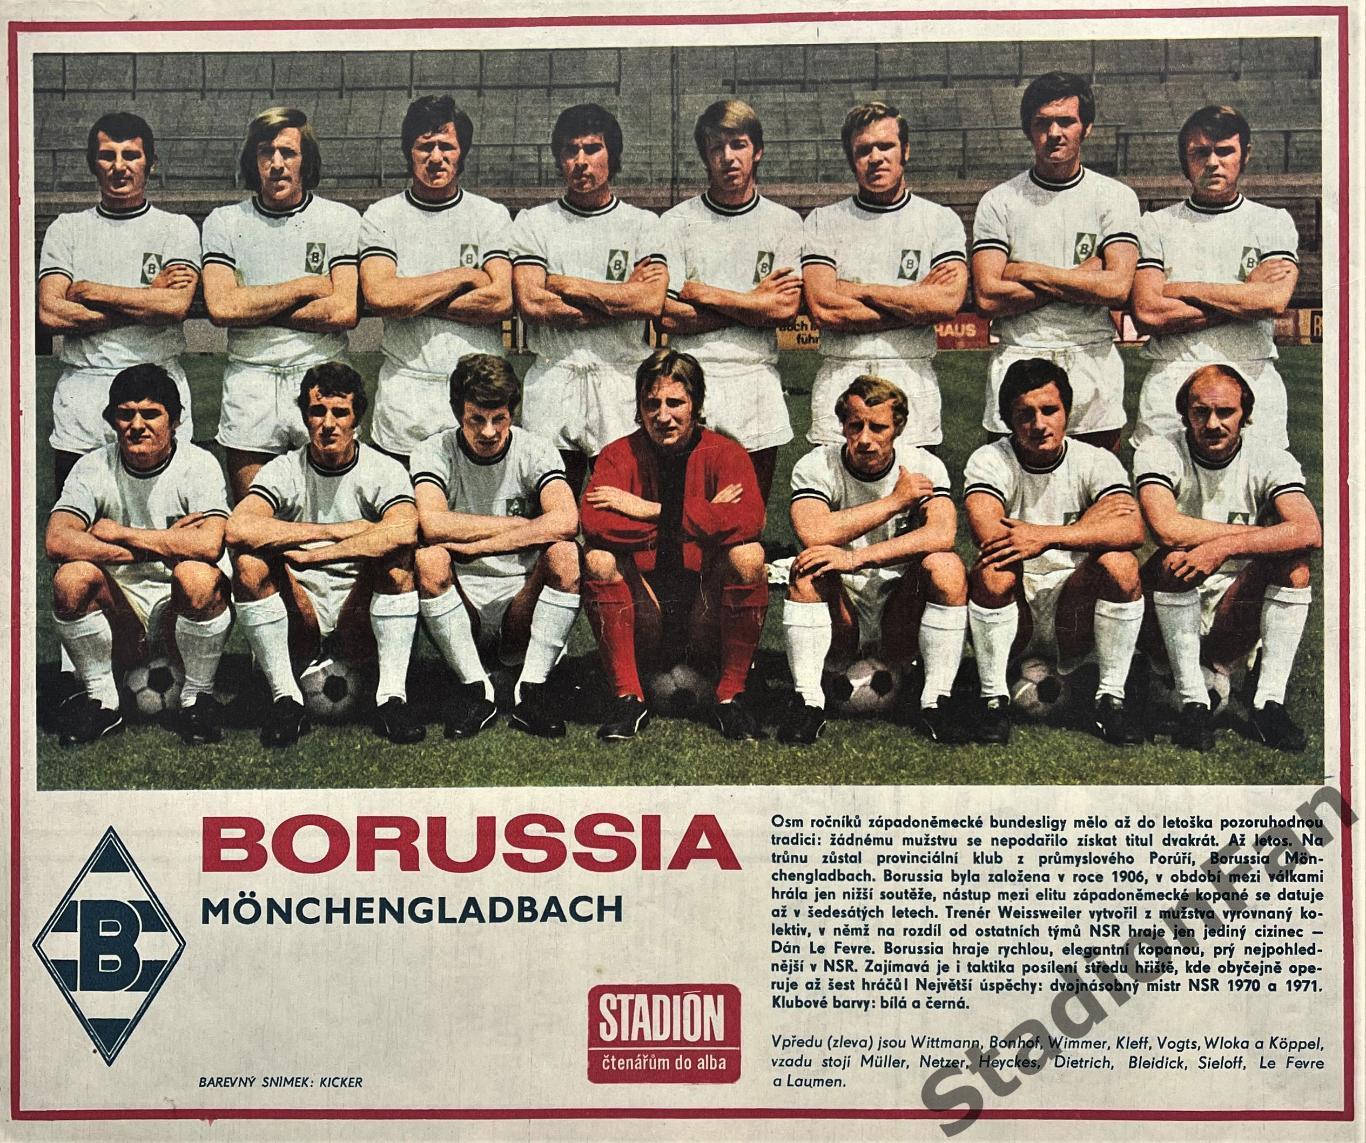 Постер из журнала Стадион (Stadion) - Borussia M?nchengladbach, 1971.